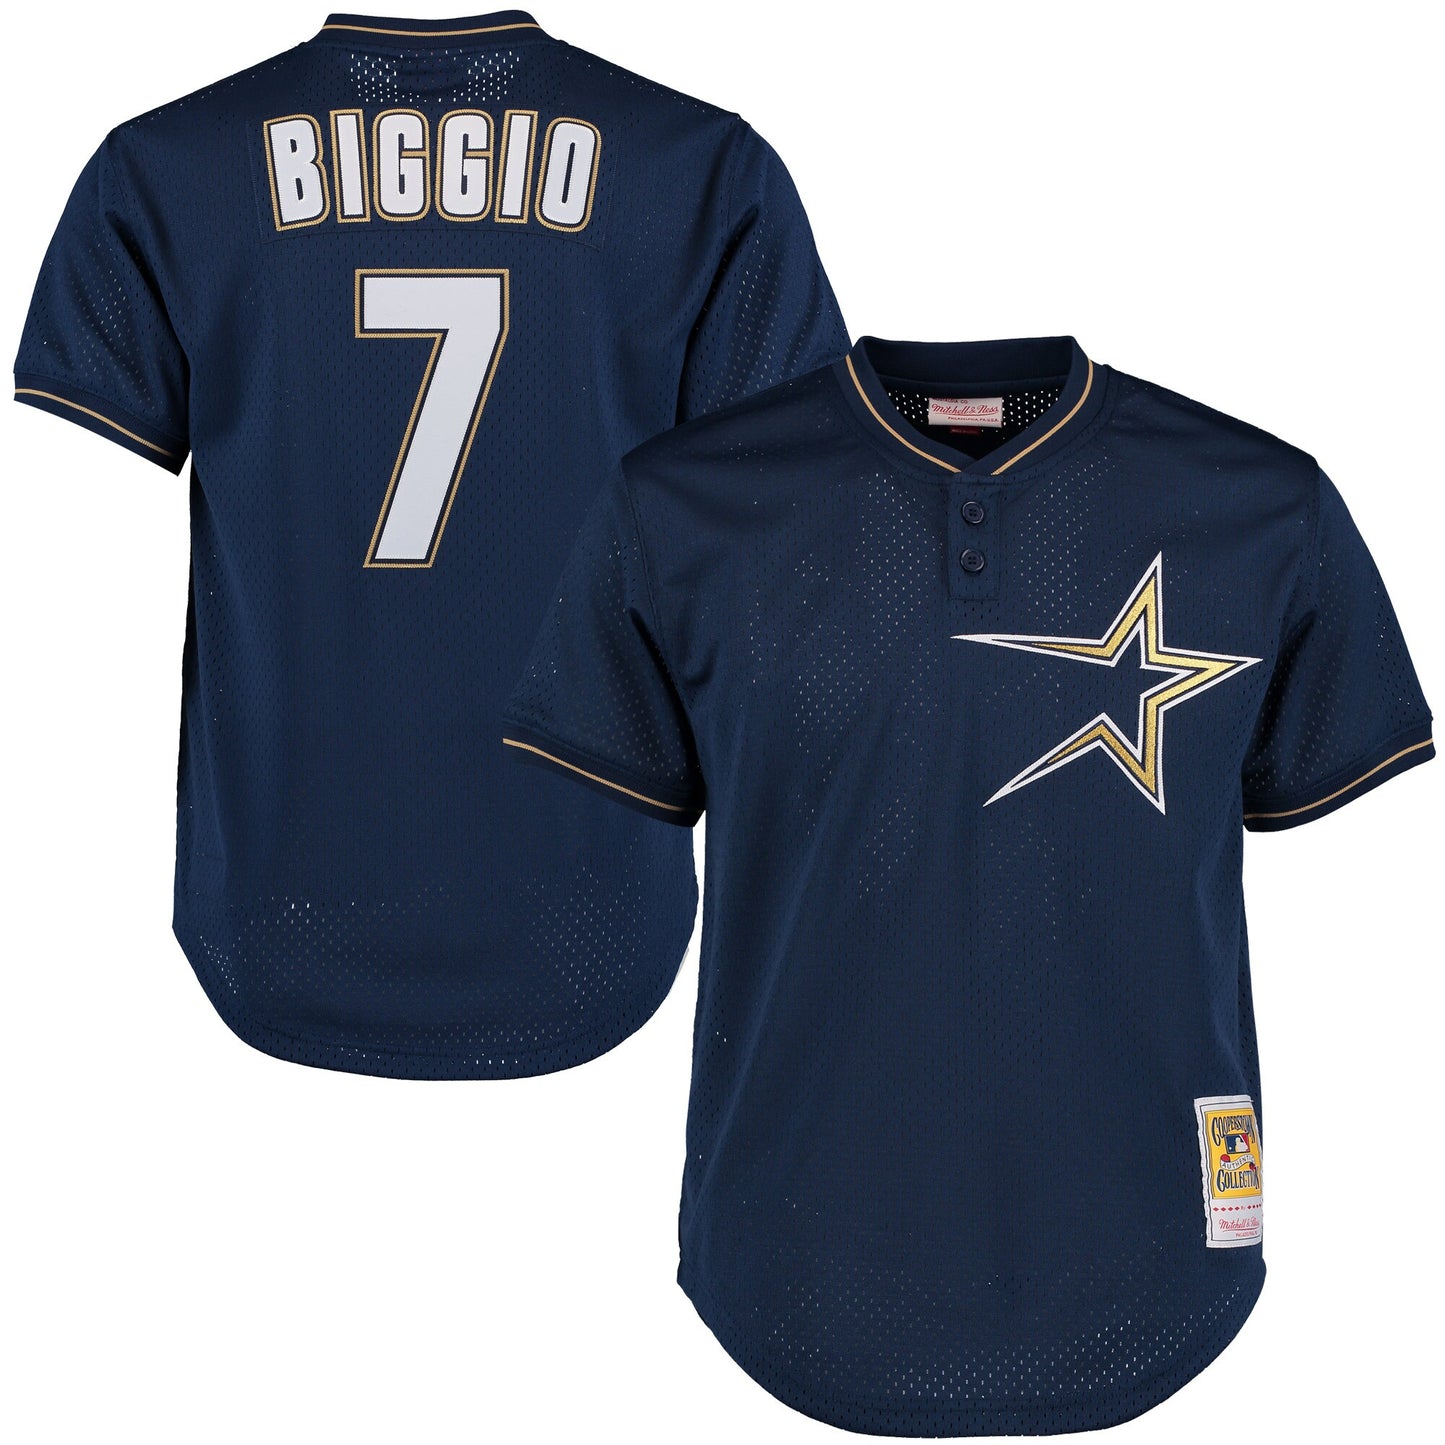 Craig Biggio Houston Astros Mitchell & Ness Cooperstown Collection Batting Practice Jersey - Navy